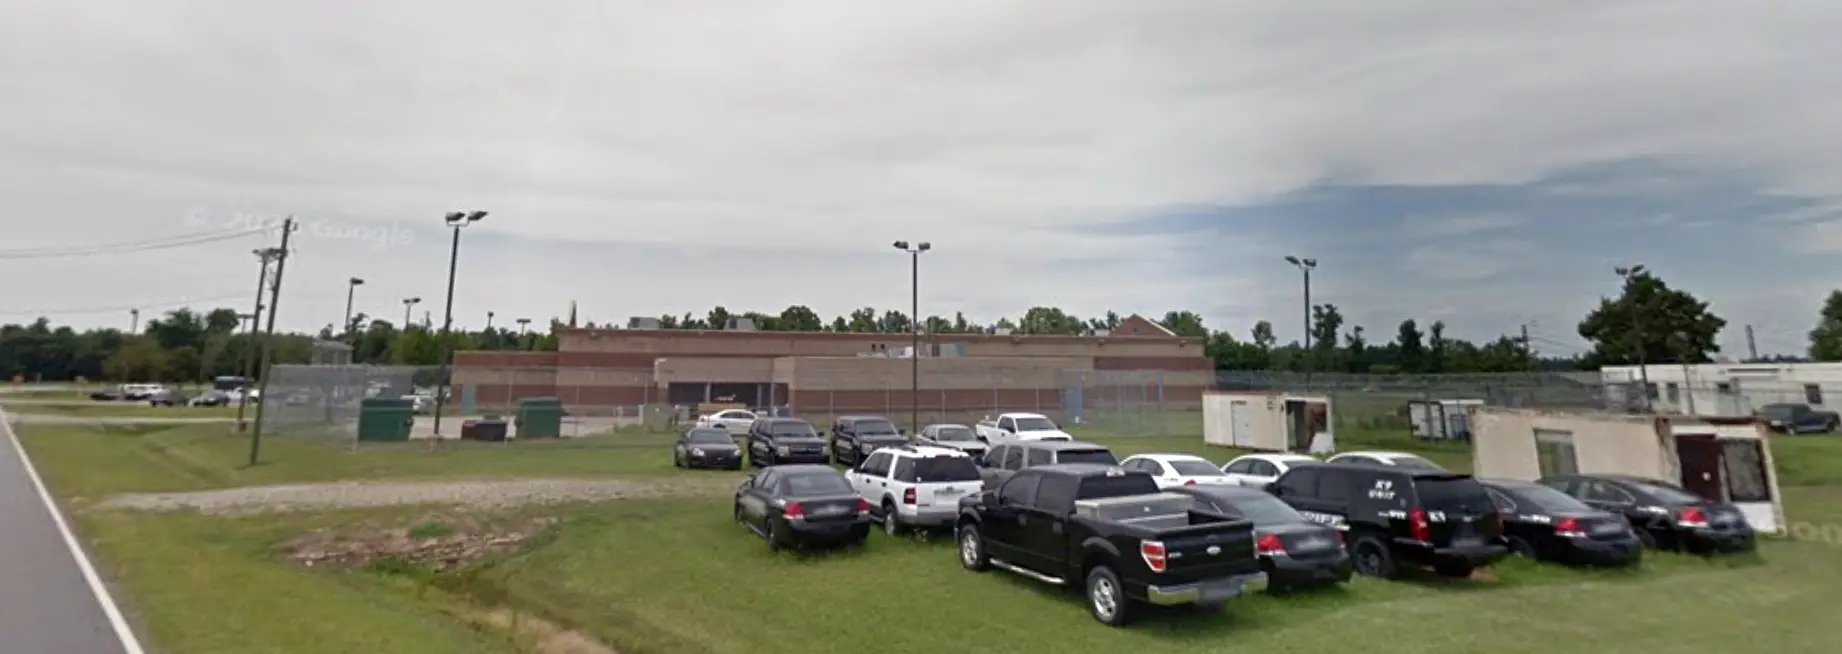 Photos Marion County Detention Center 5